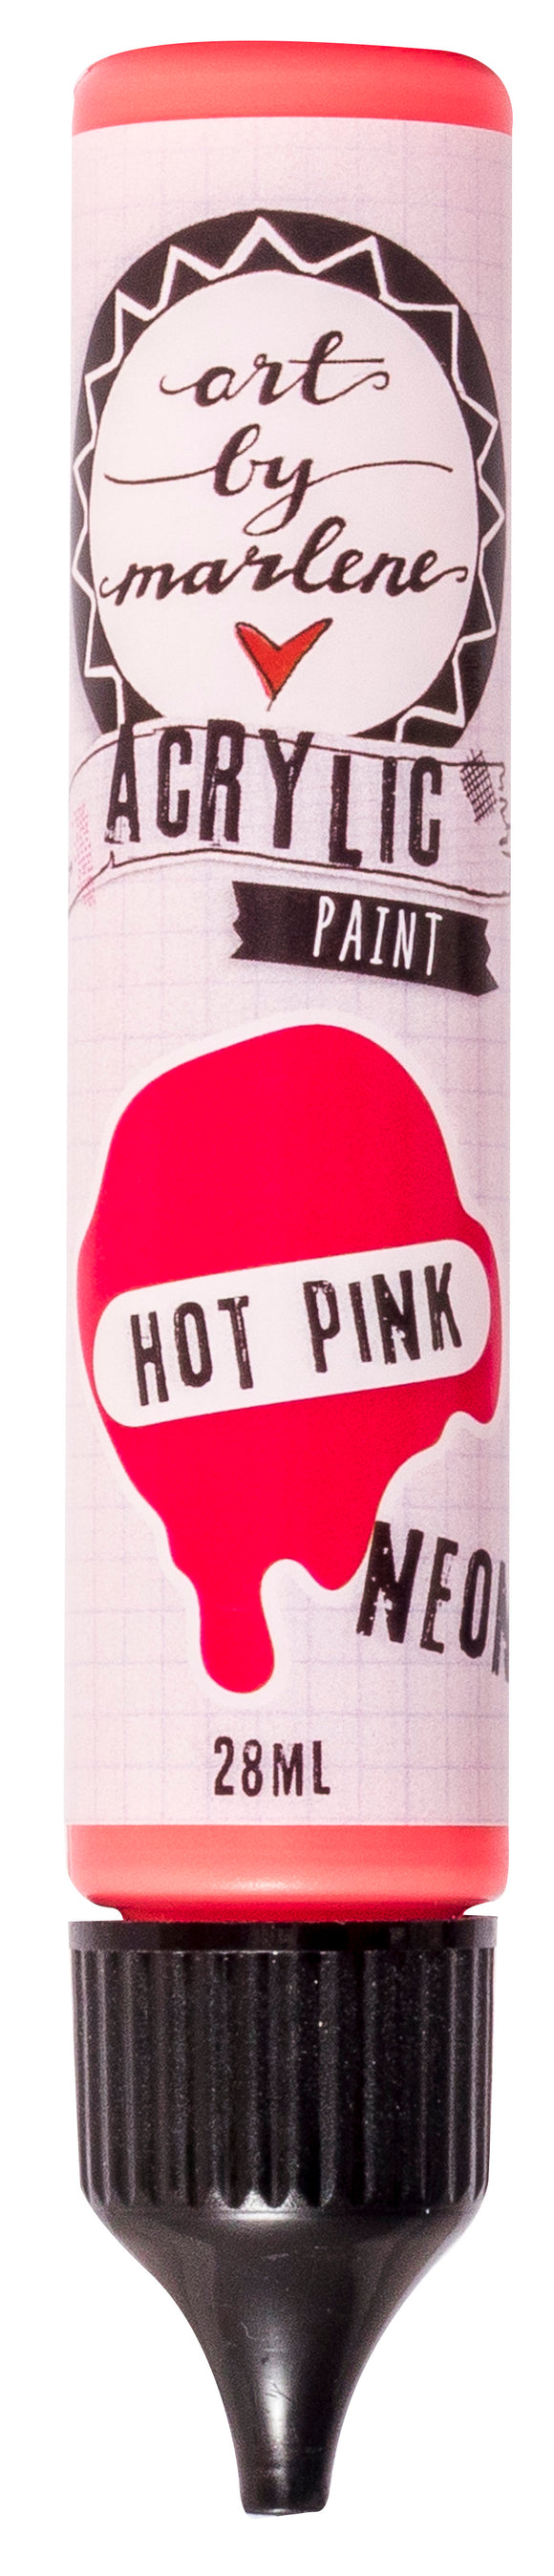 Acrylic Paint - Hot Pink Neon : (ABM) ACP21